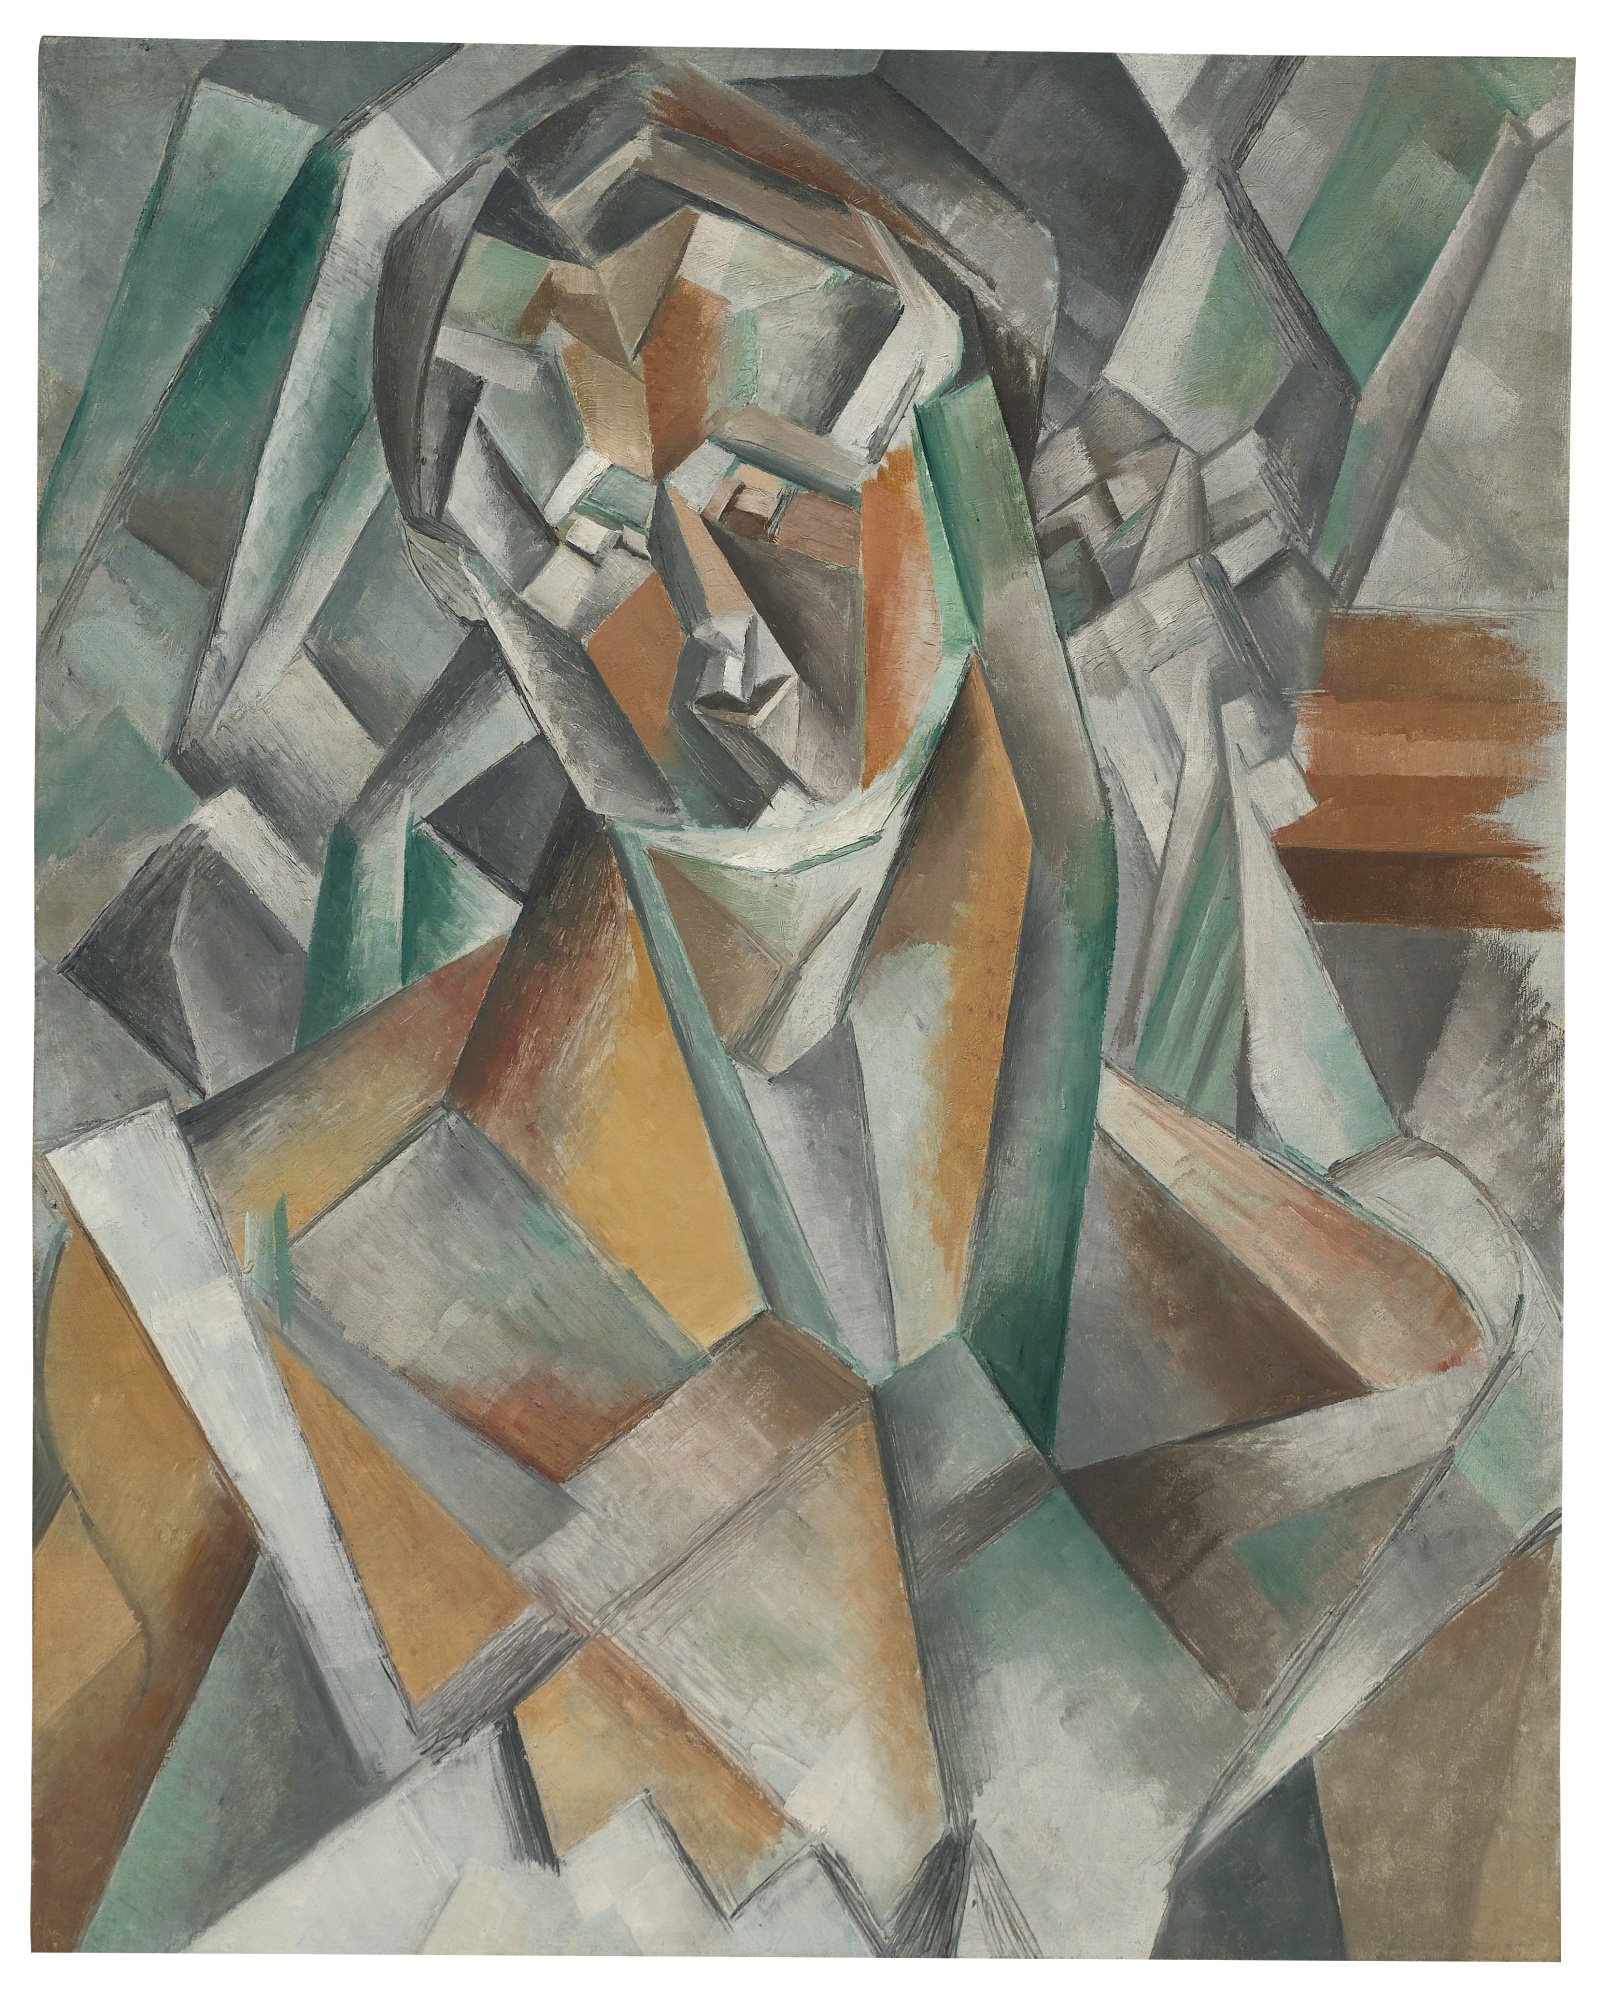 Femme assise, capolavoro cubista di Picasso, all’asta da Sotheby’s